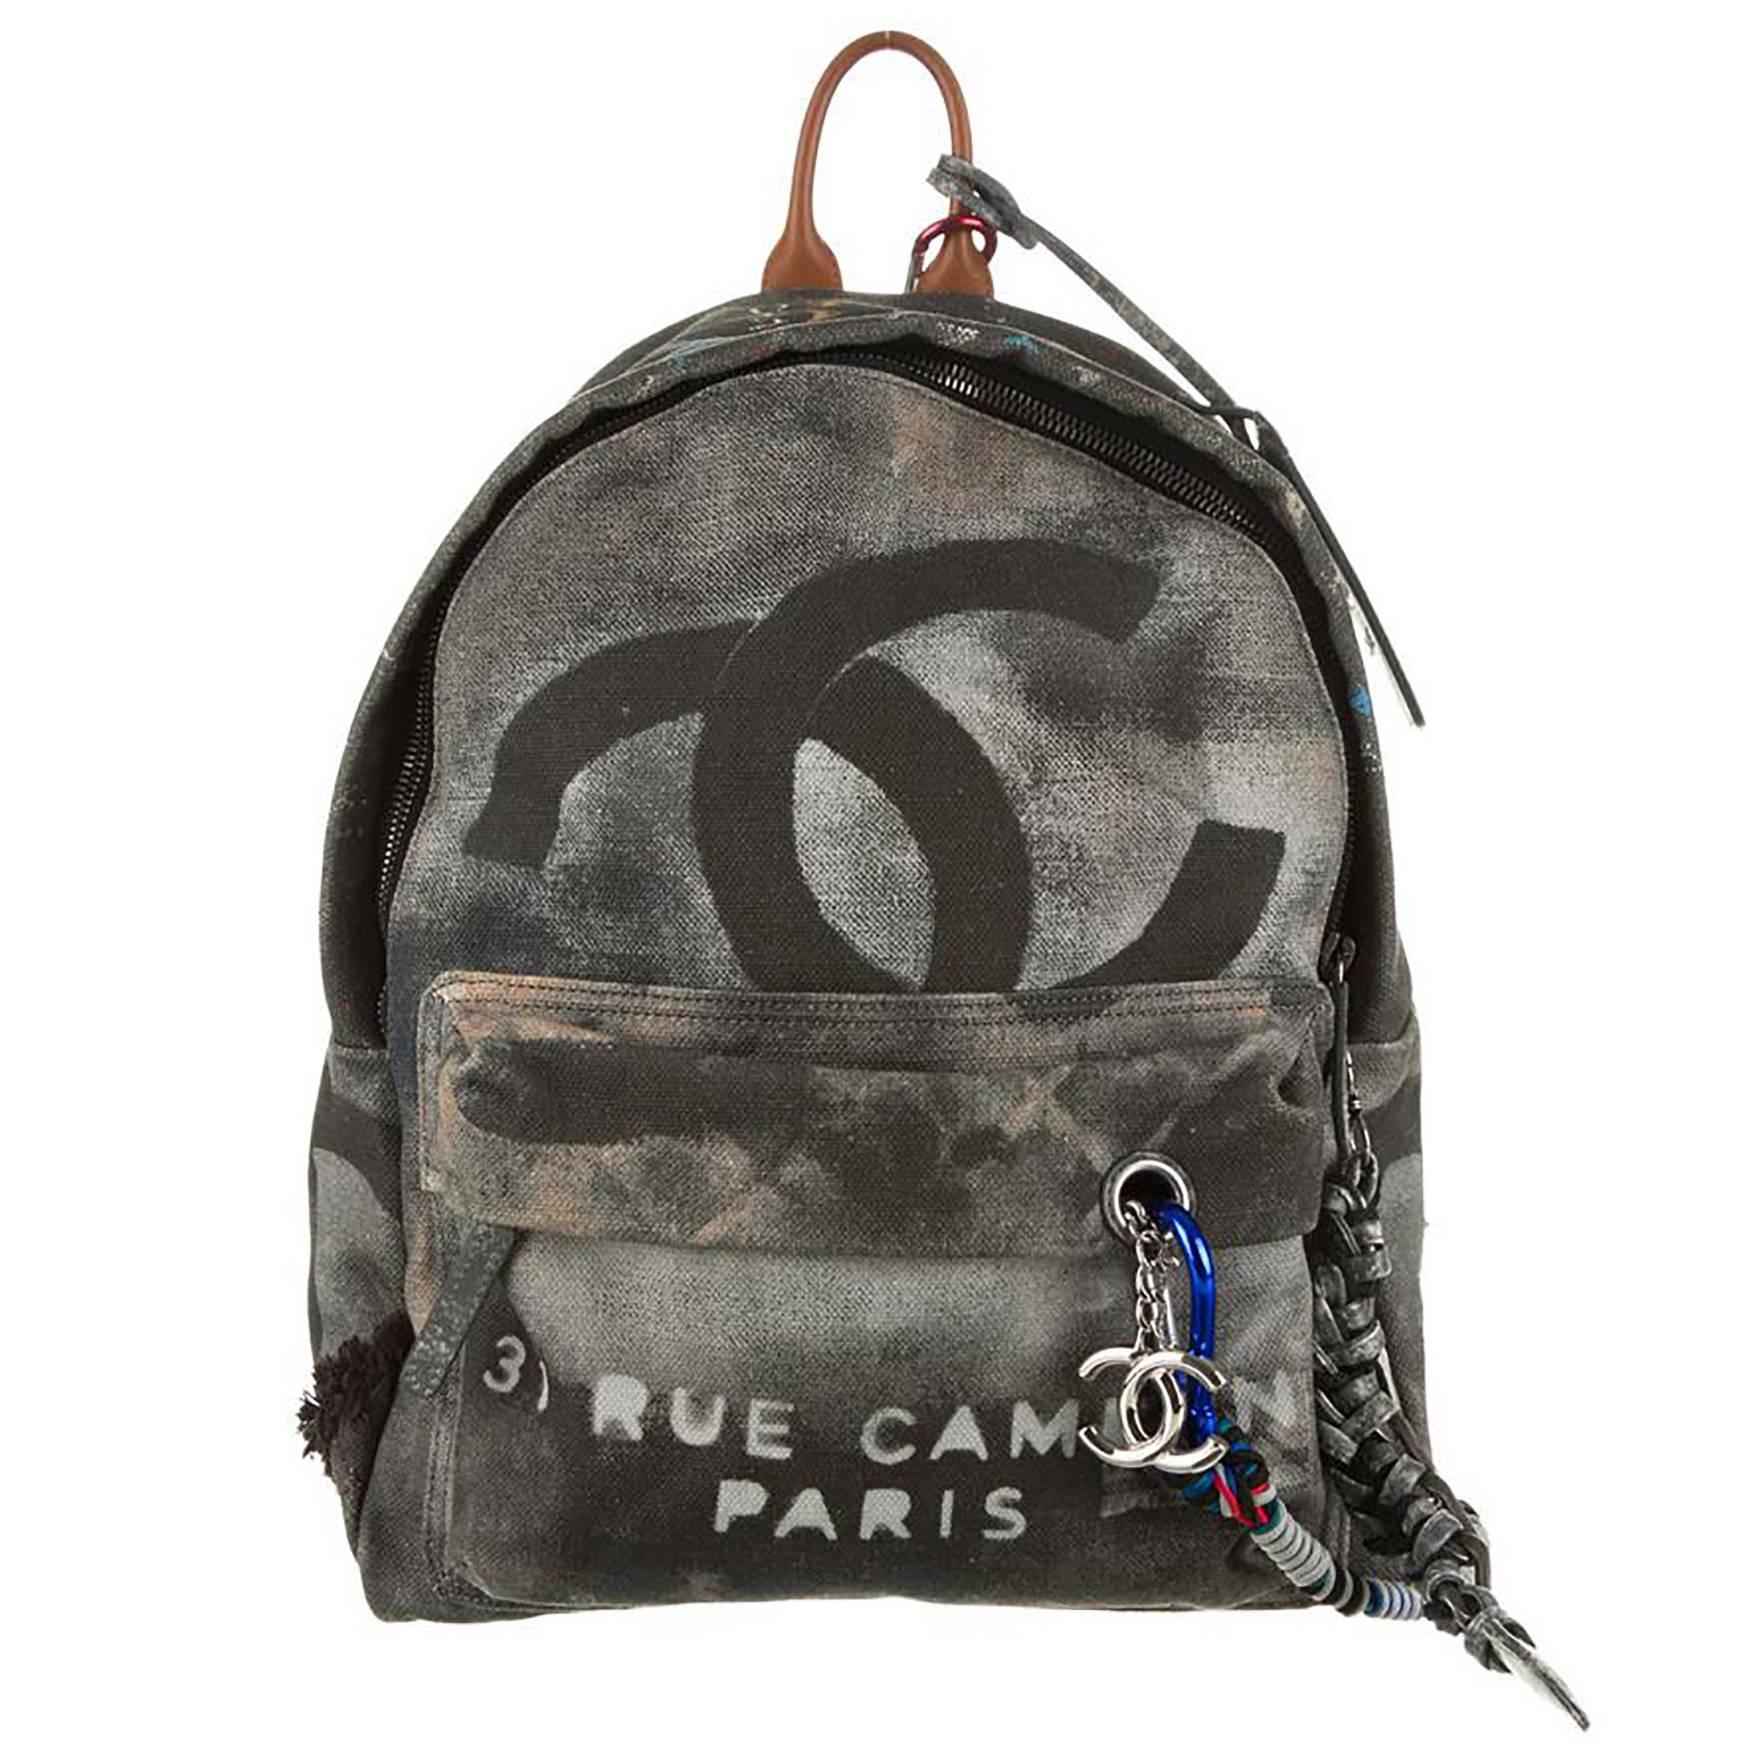 Chanel Denim Graffiti Bag - 2 For Sale on 1stDibs